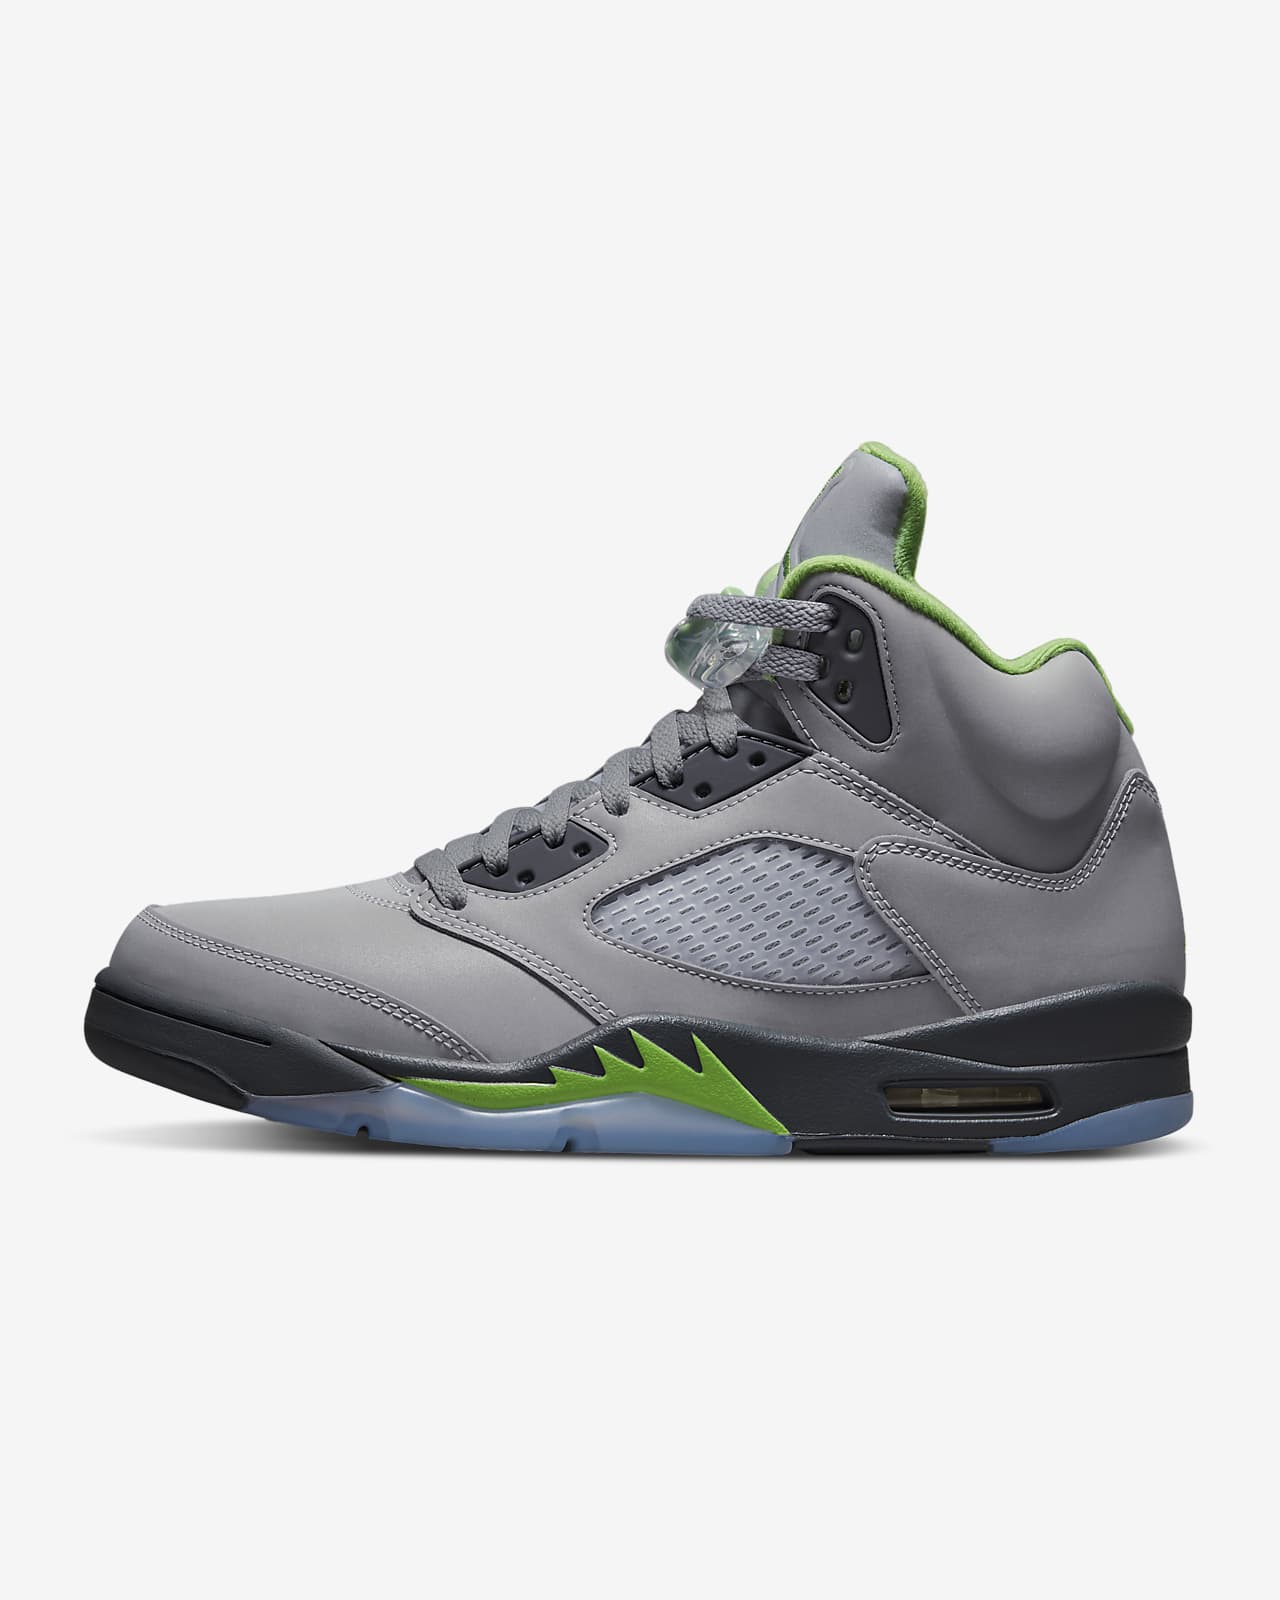 Visión general Goteo vestíbulo Air Jordan 5 Retro “Green Bean” Men's Shoes. Nike.com